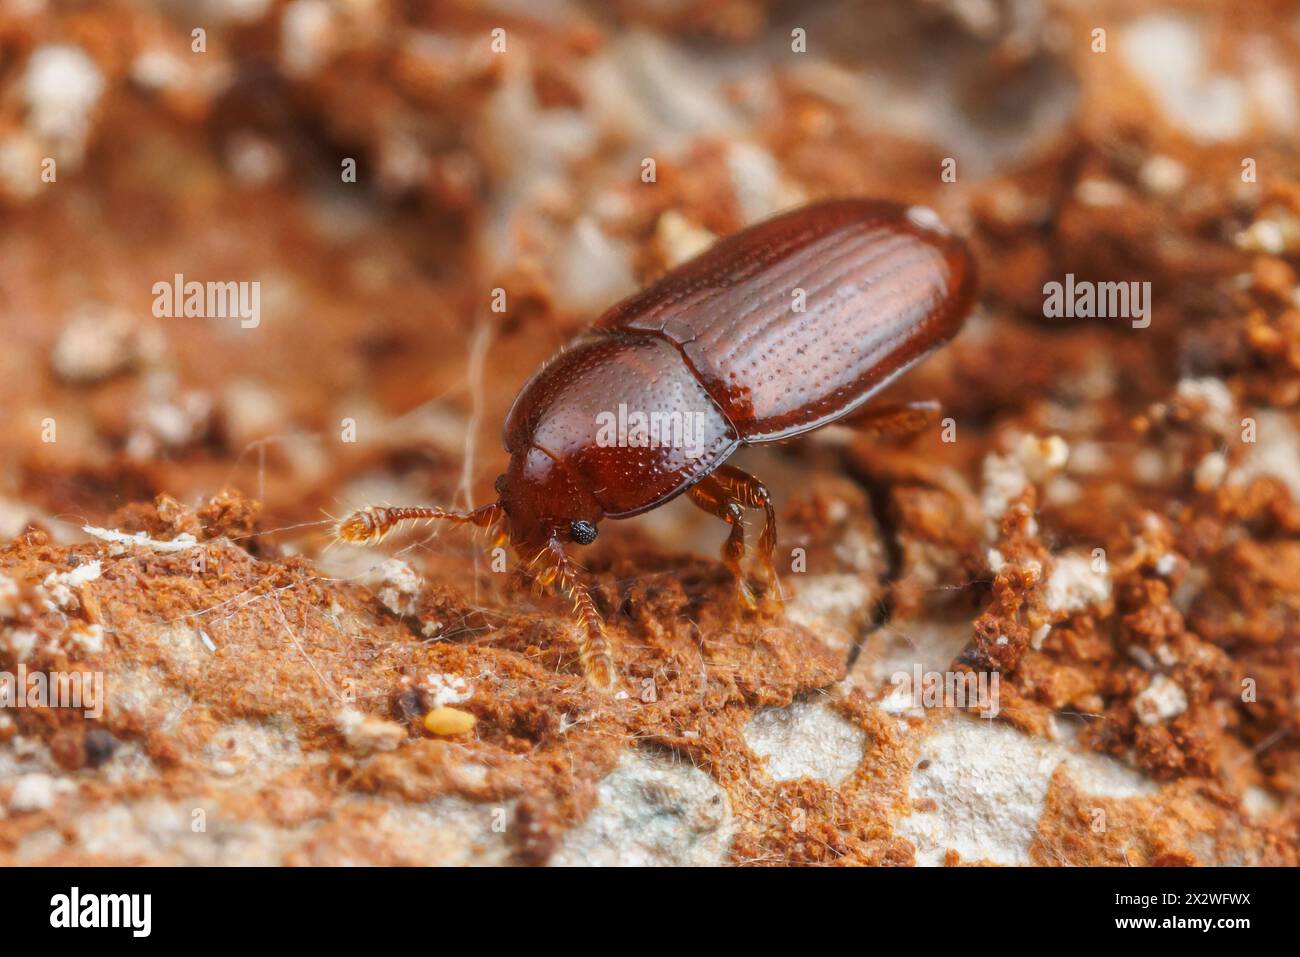 Minute Bark Beetle (Philothermus glabriculus) Stock Photo